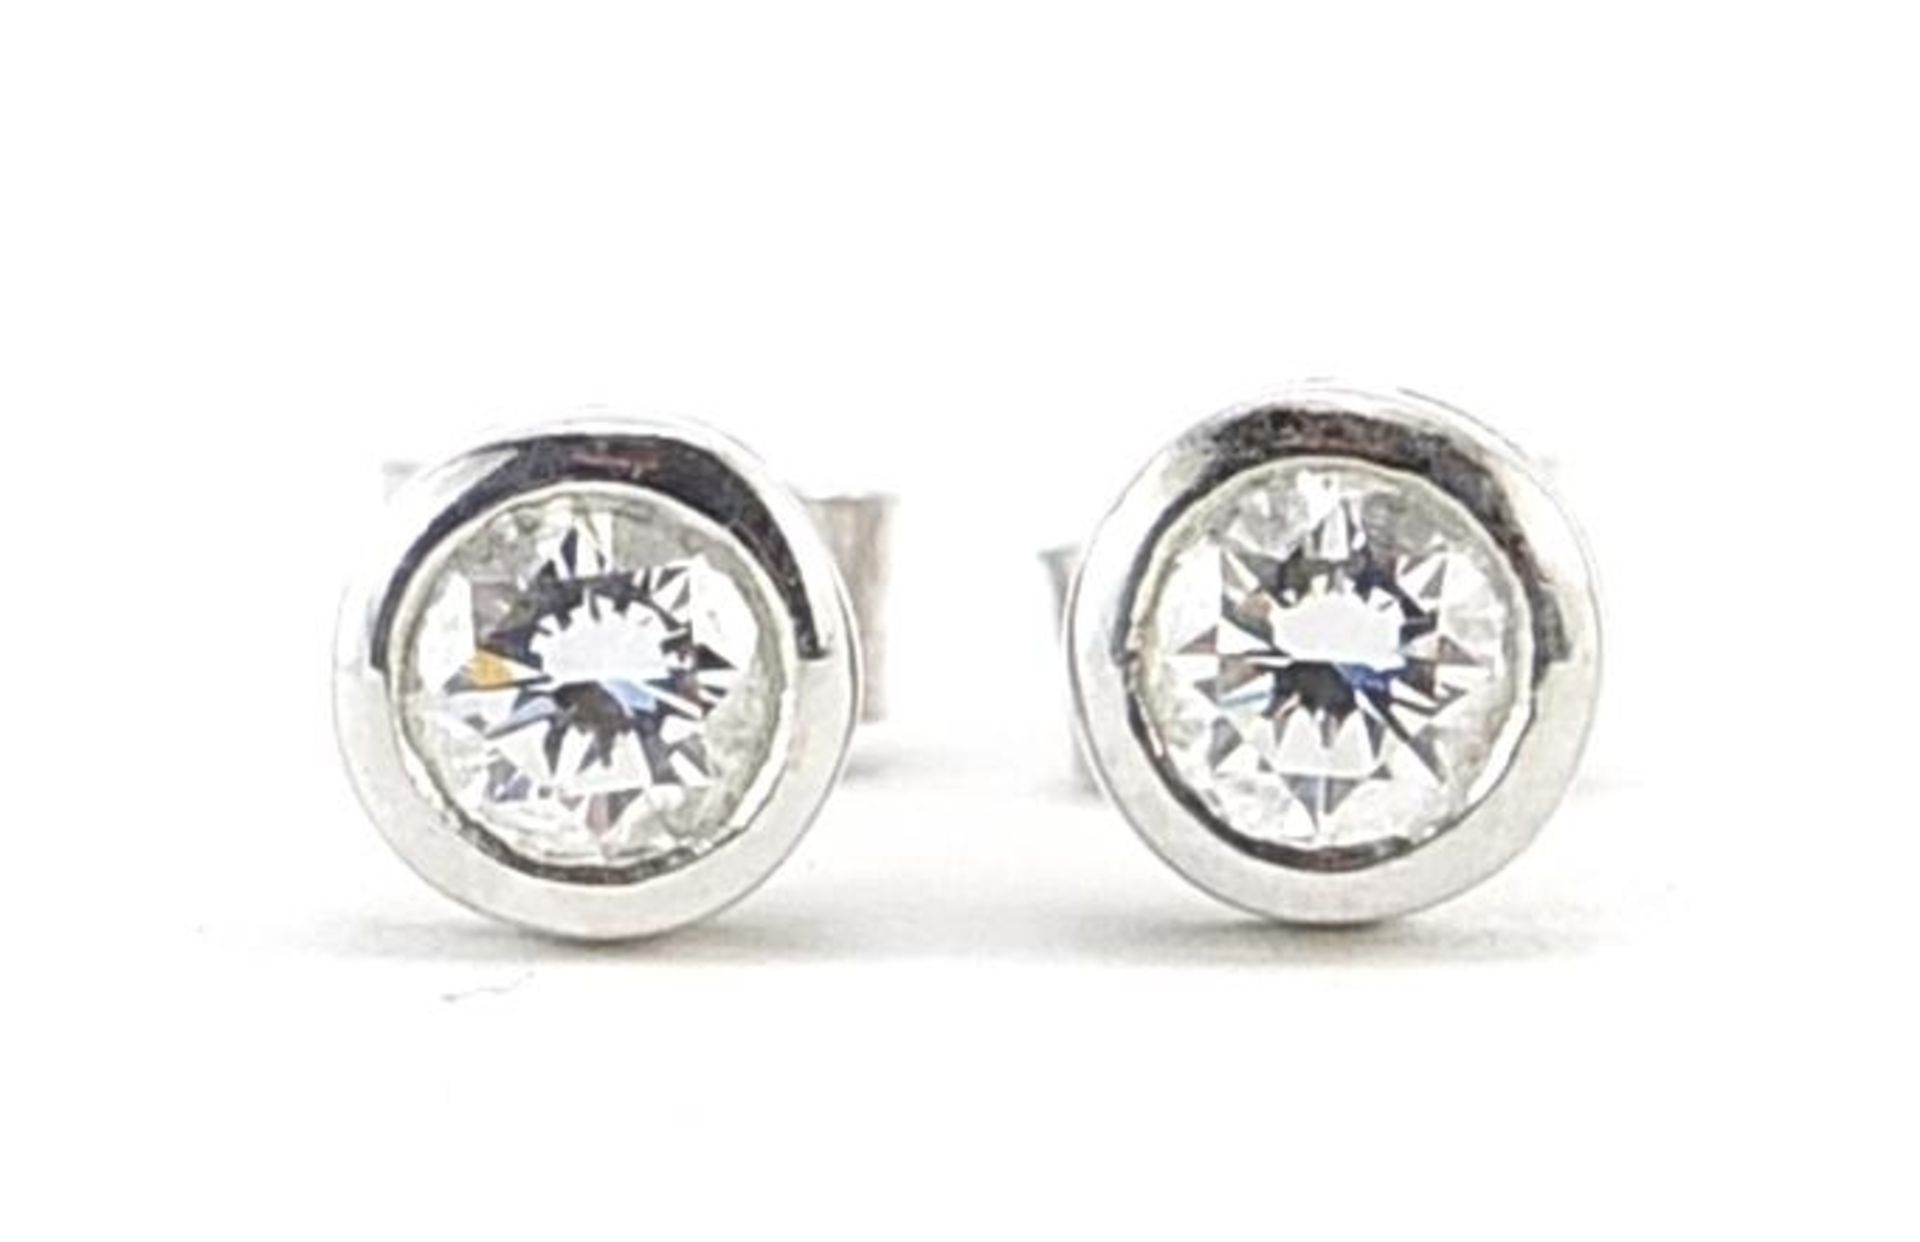 Pair of 18ct white gold diamond stud earrings, 6mm in diameter, 1.9g